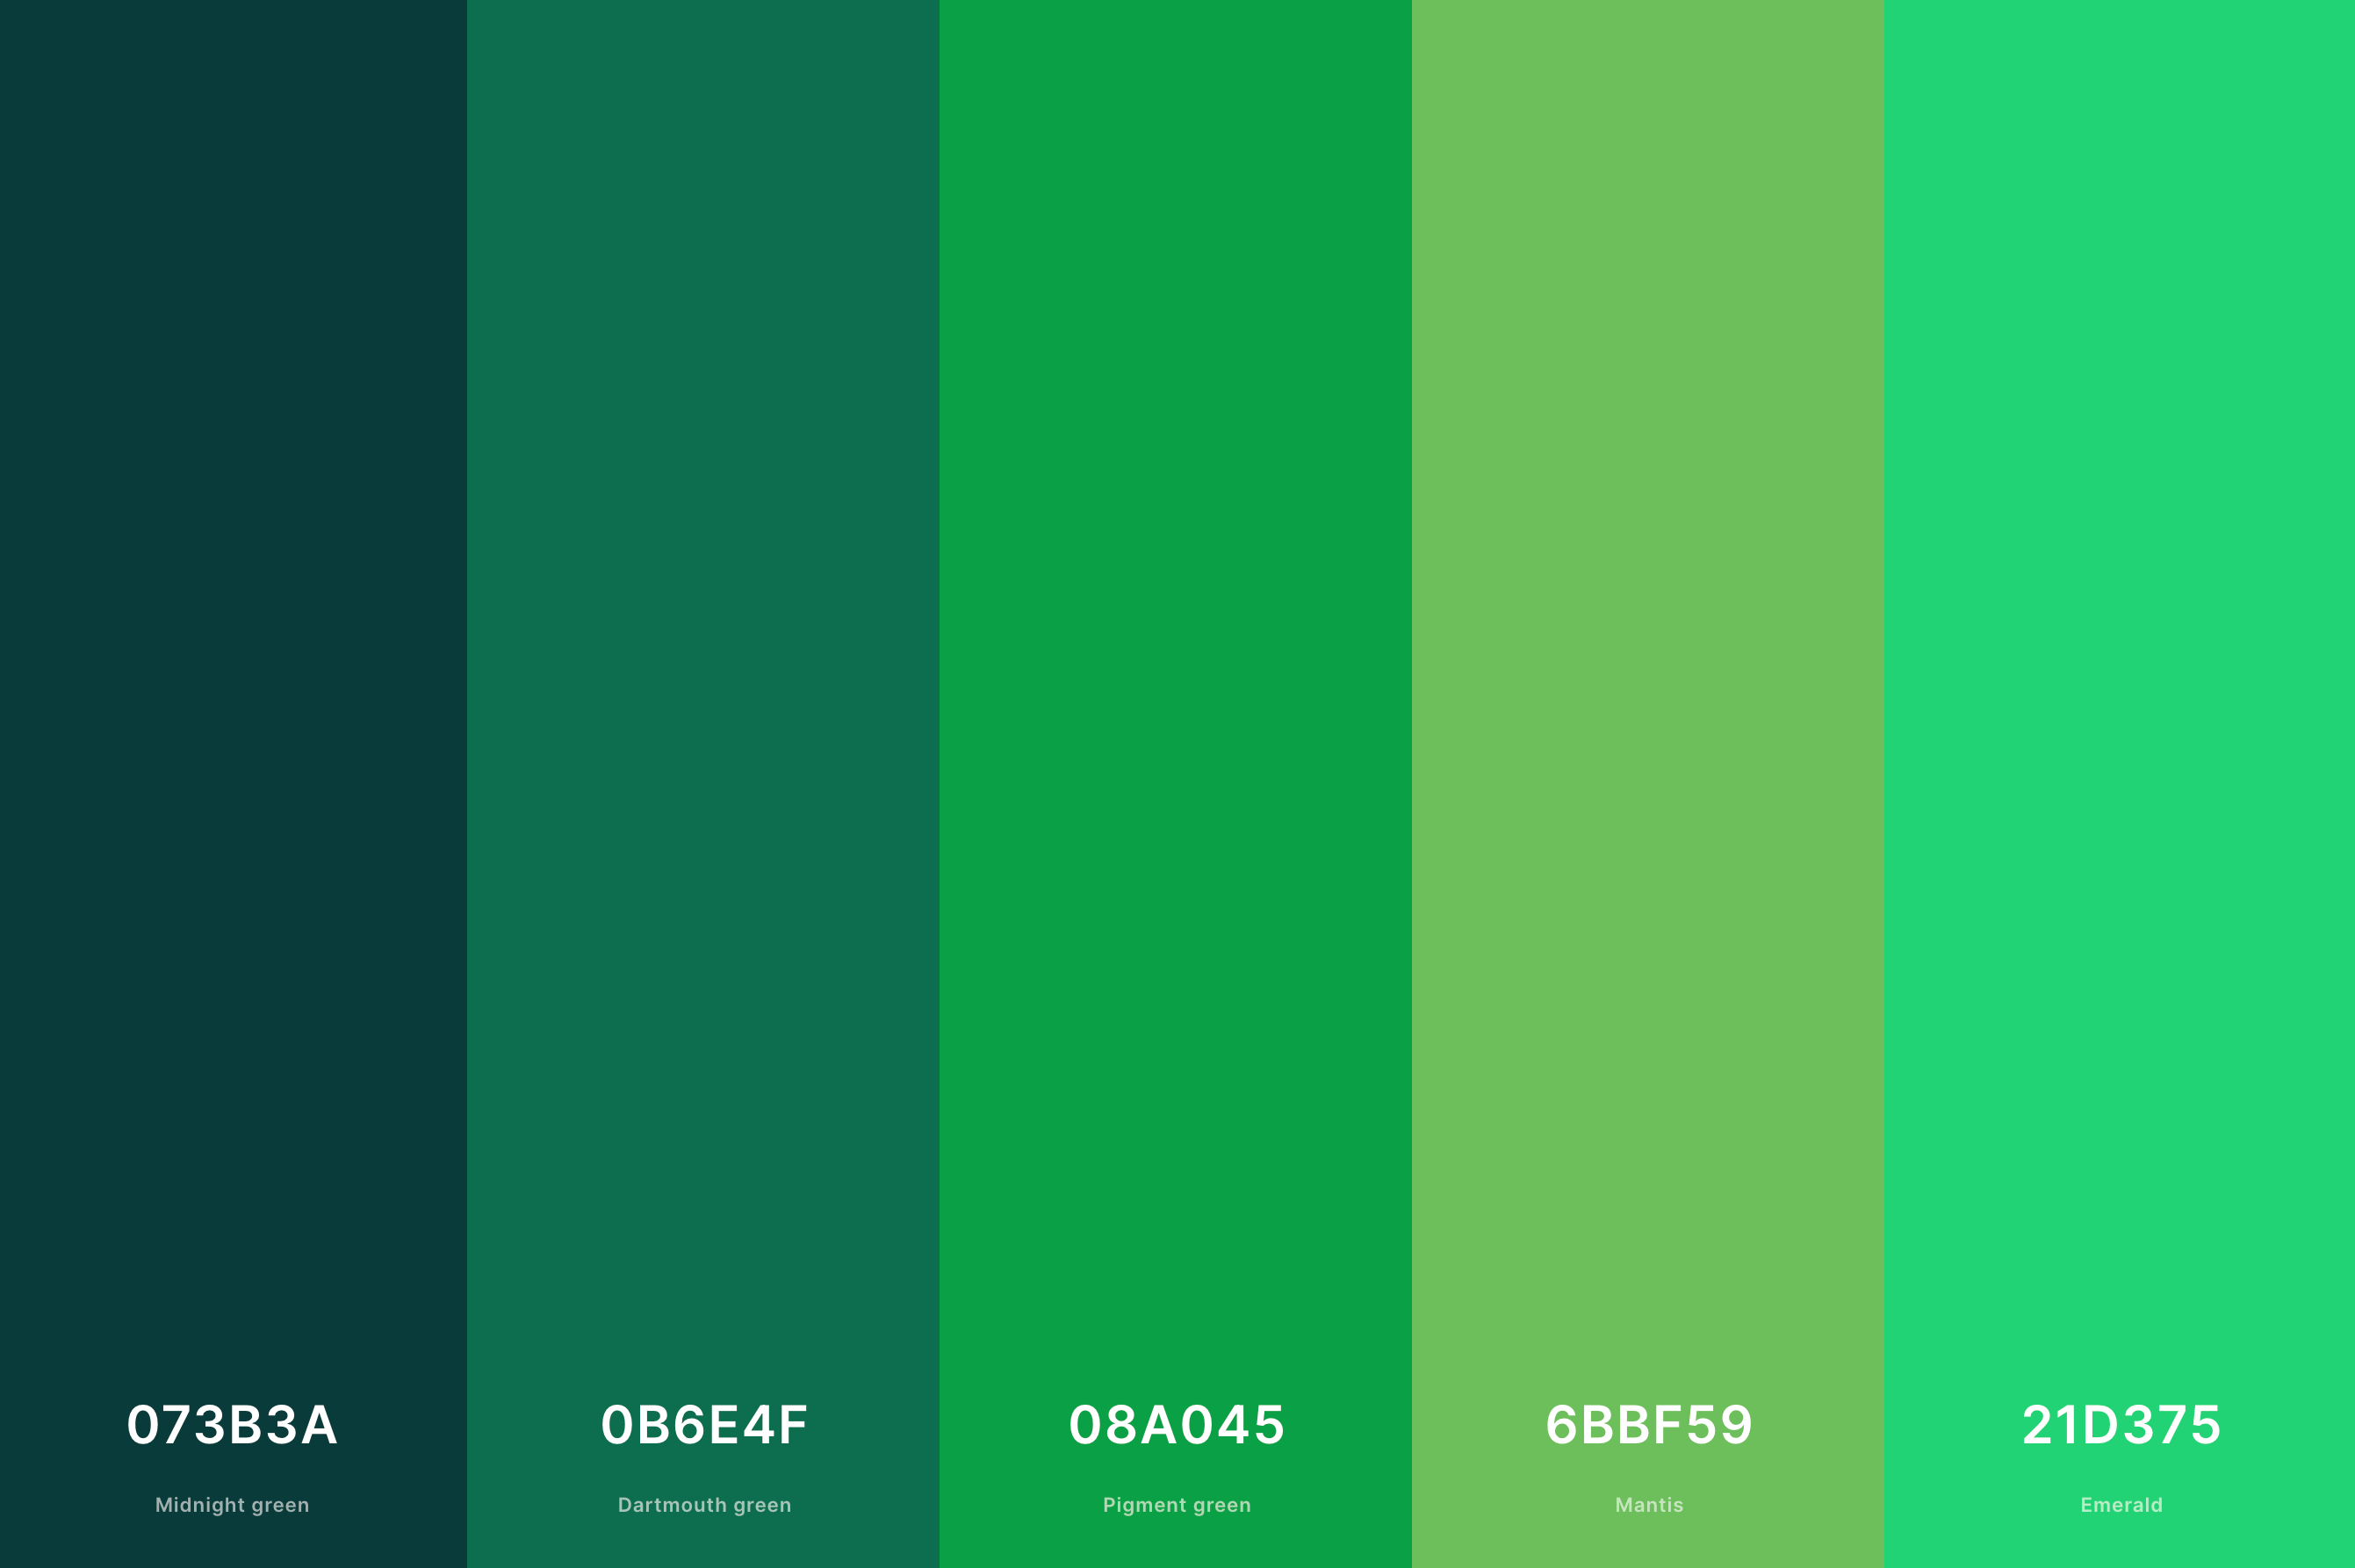 1. "Emerald Green" - wide 9